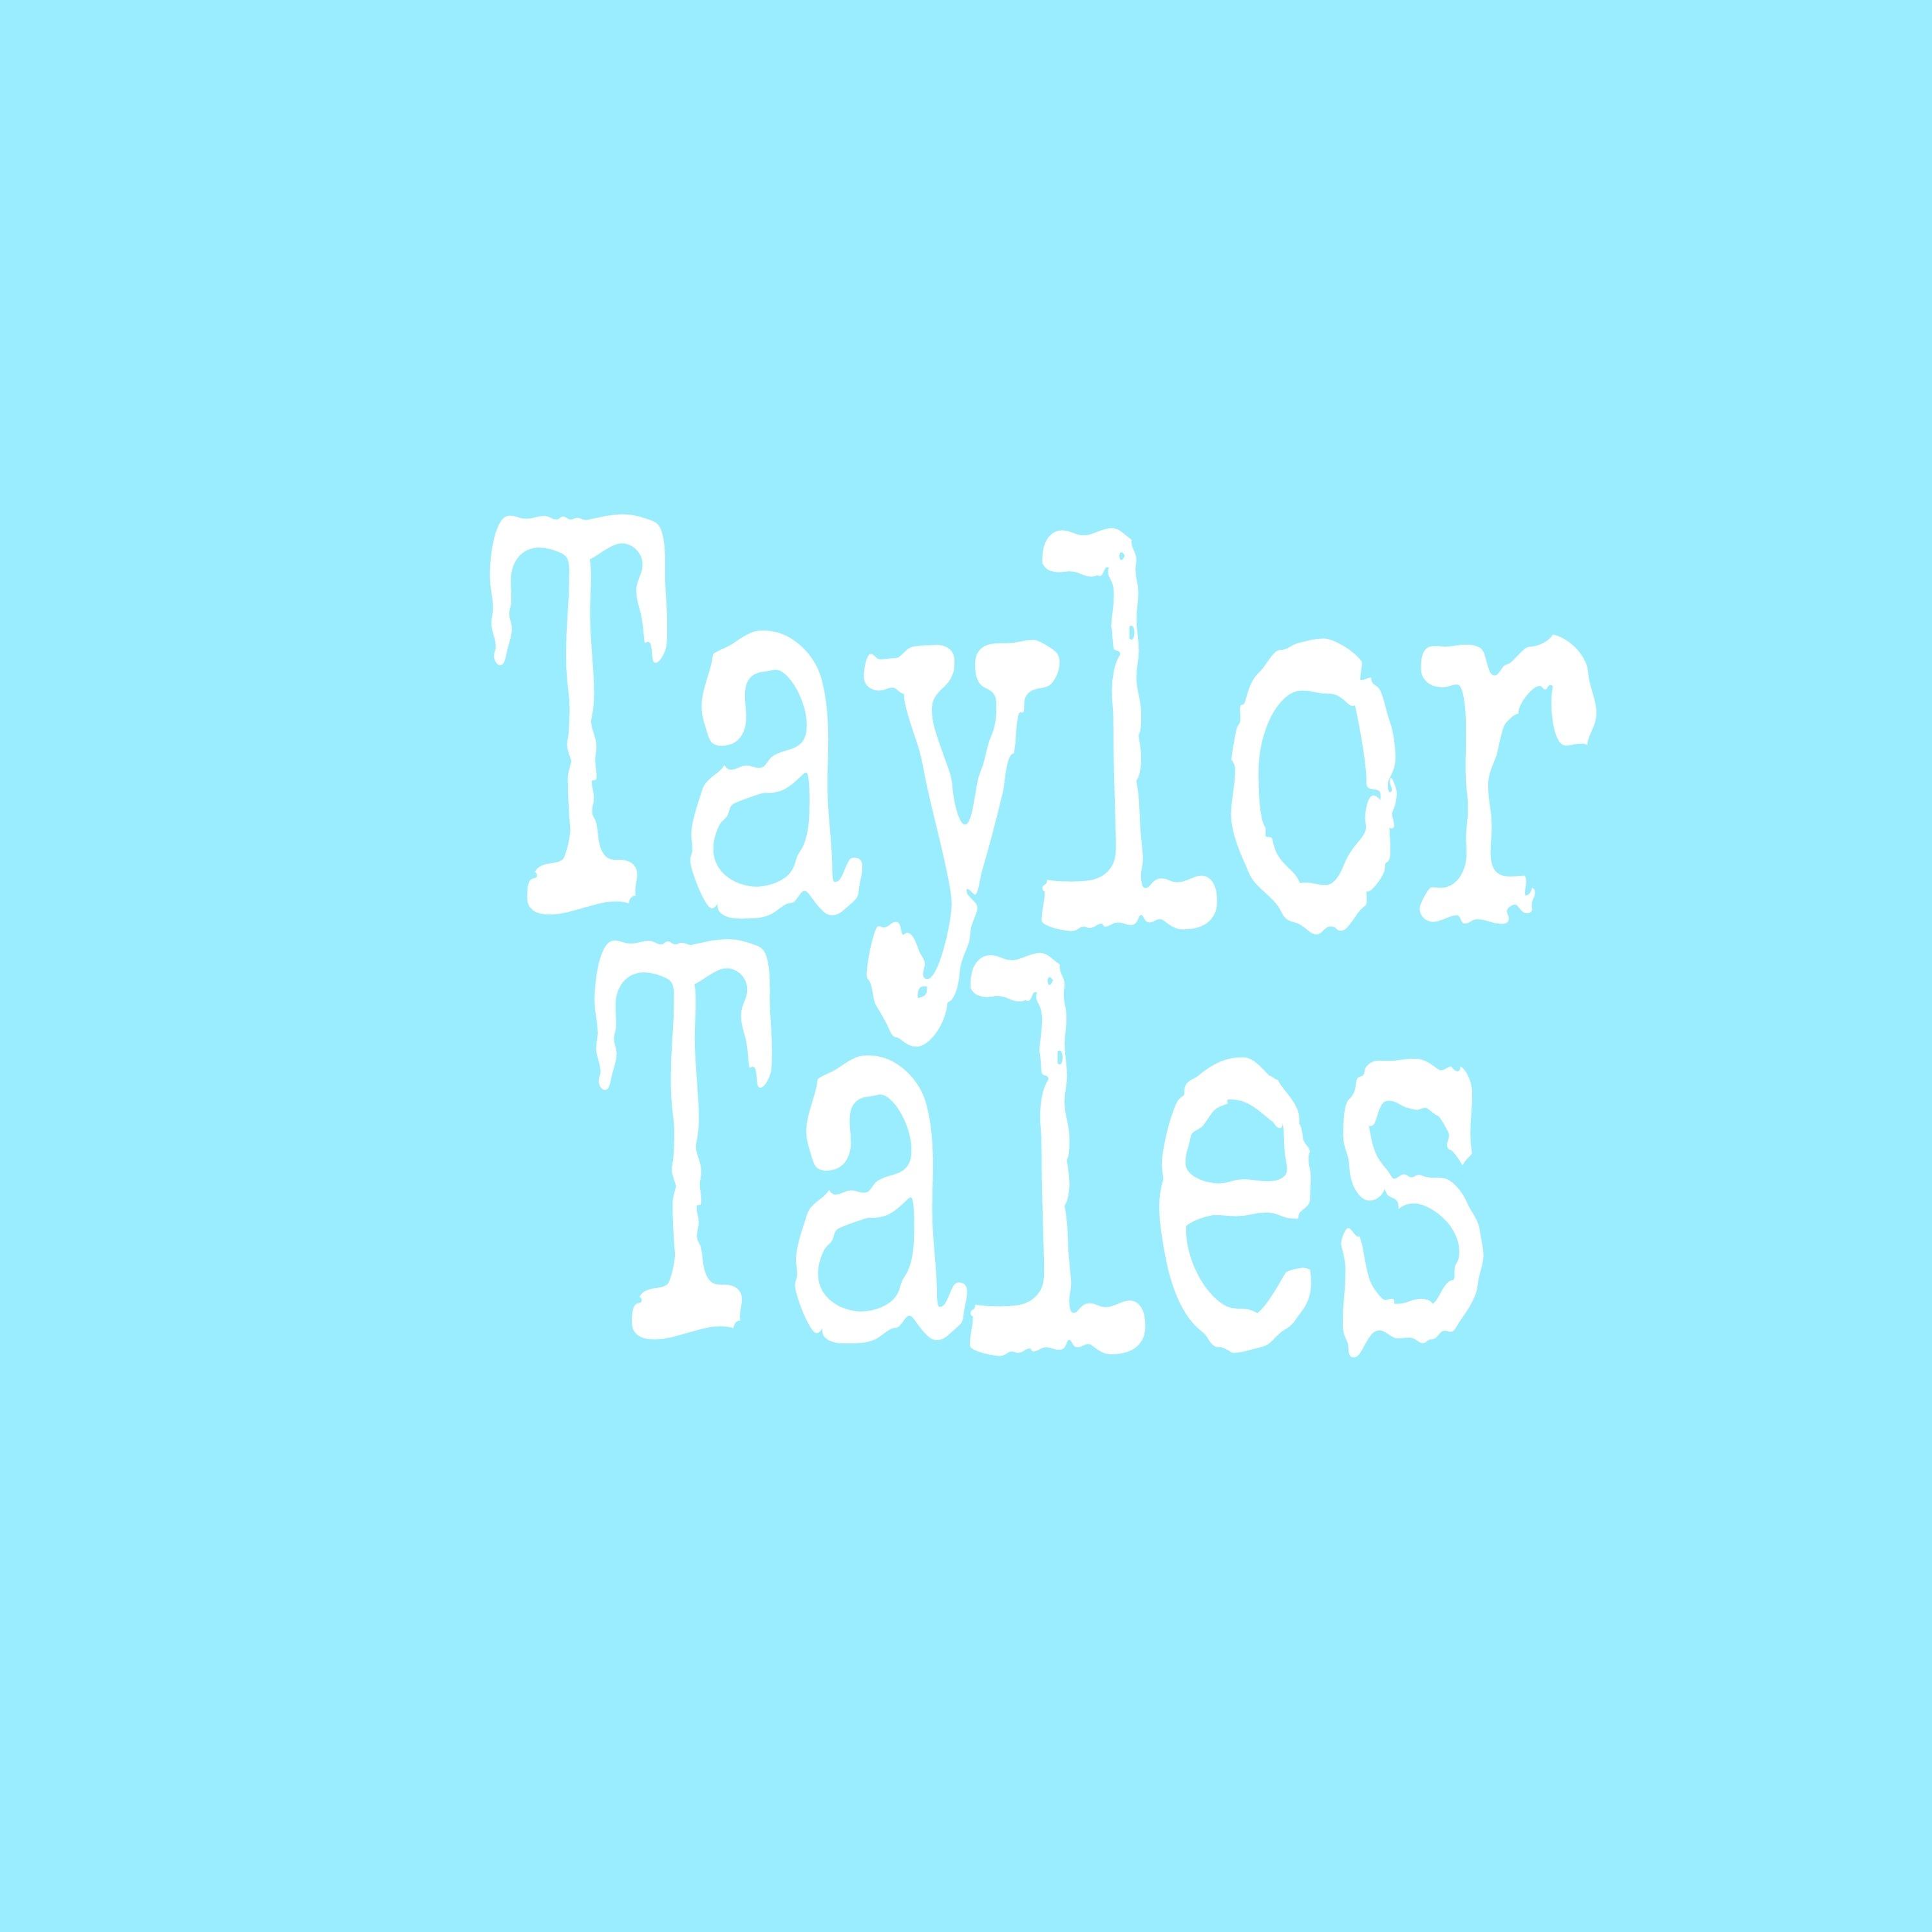 Taylor Tales